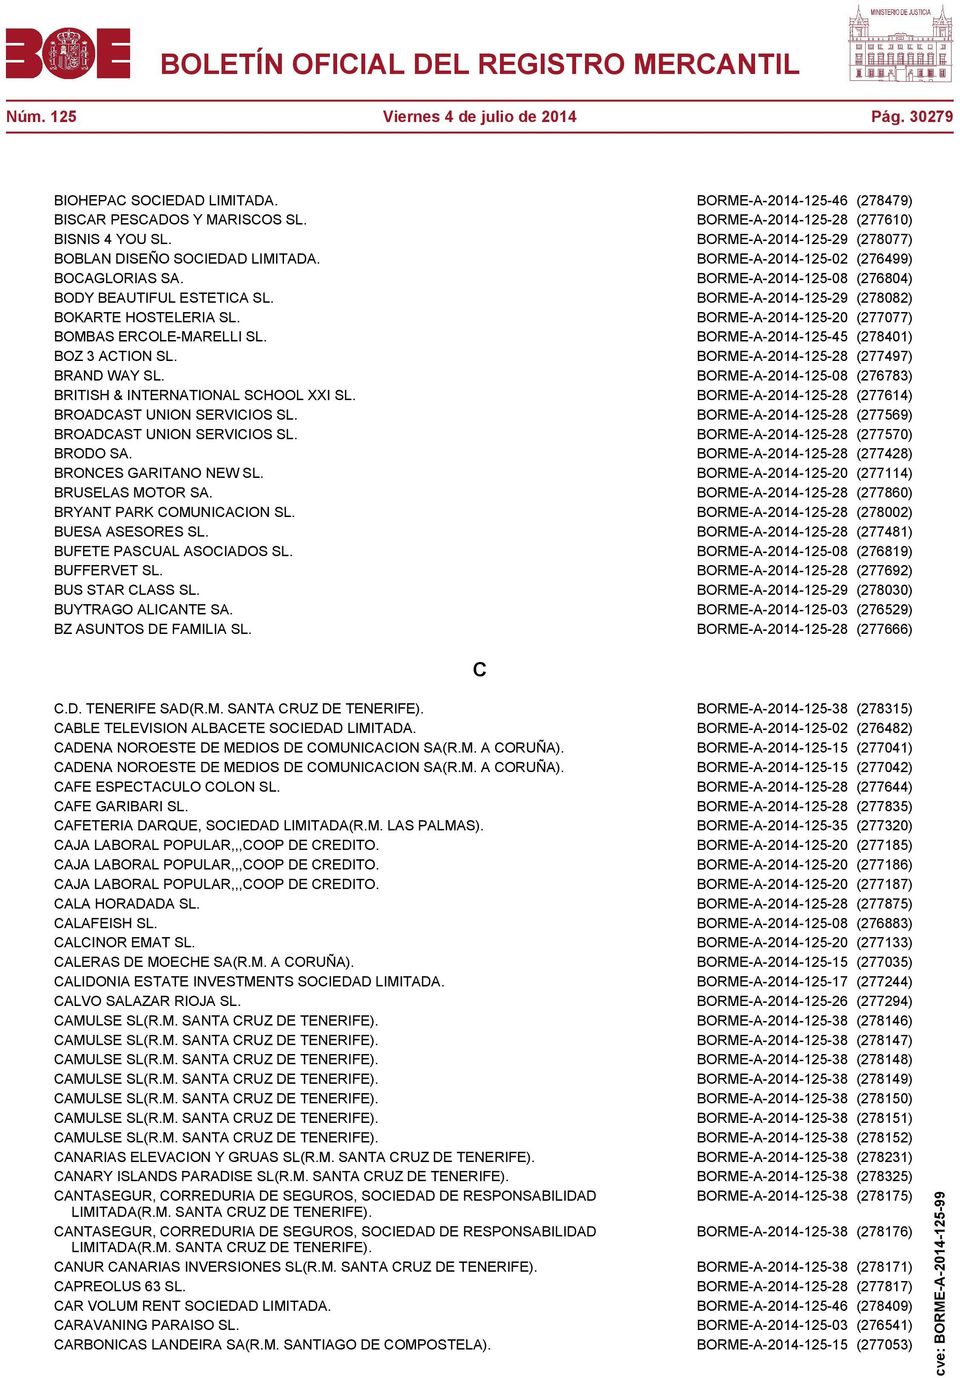 BORME-A-2014-125-29 (278082) BOKARTE HOSTELERIA SL. BORME-A-2014-125-20 (277077) BOMBAS ERCOLE-MARELLI SL. BORME-A-2014-125-45 (278401) BOZ 3 ACTION SL. BORME-A-2014-125-28 (277497) BRAND WAY SL.